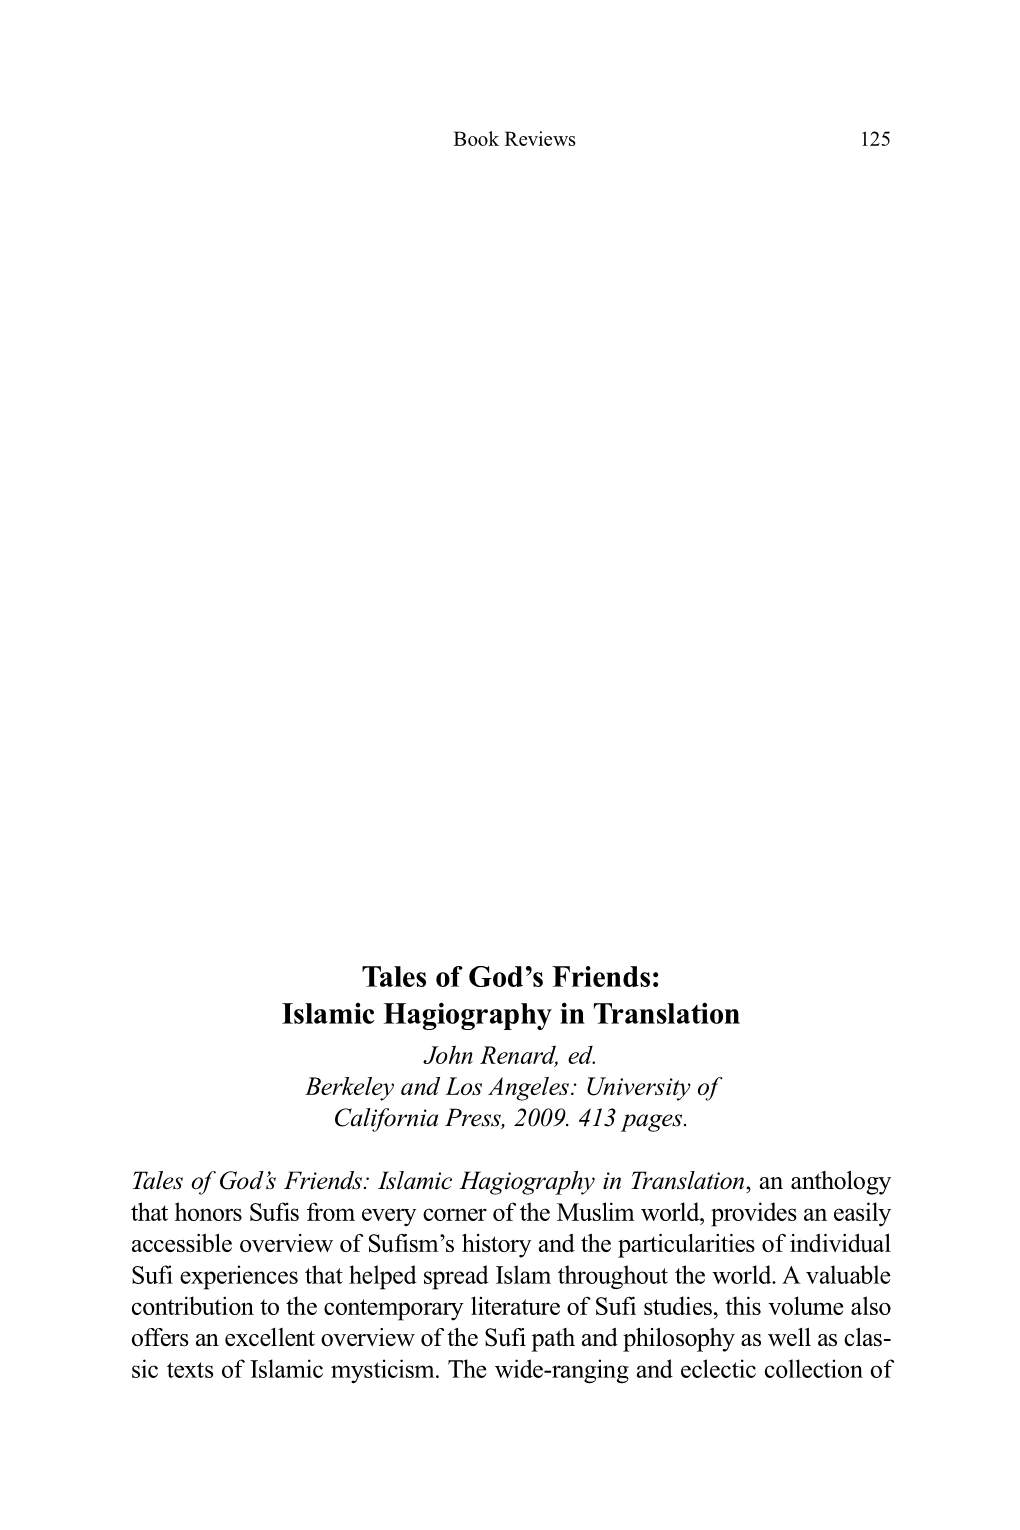 Islamic Hagiography in Translation John Renard, Ed